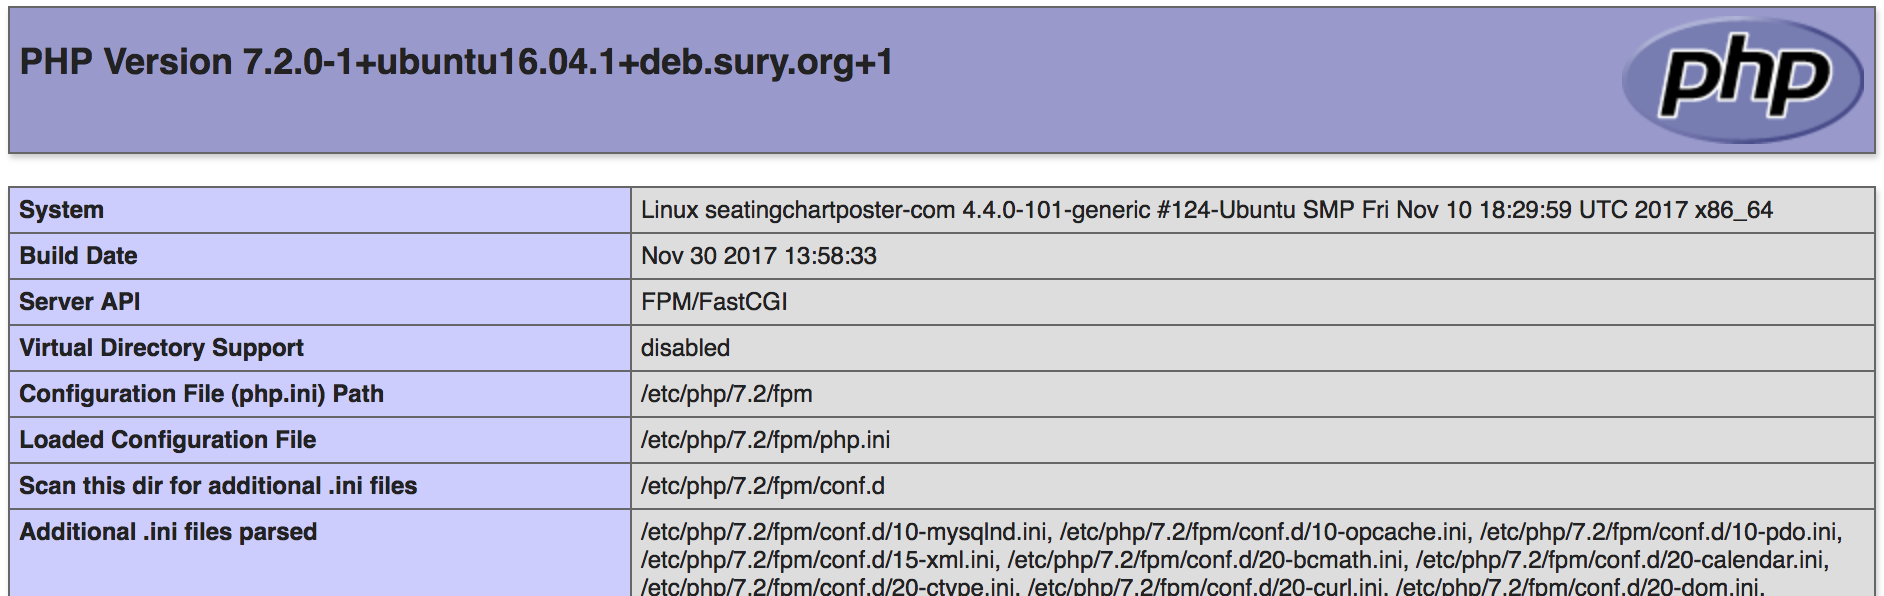 PHP info screenshot